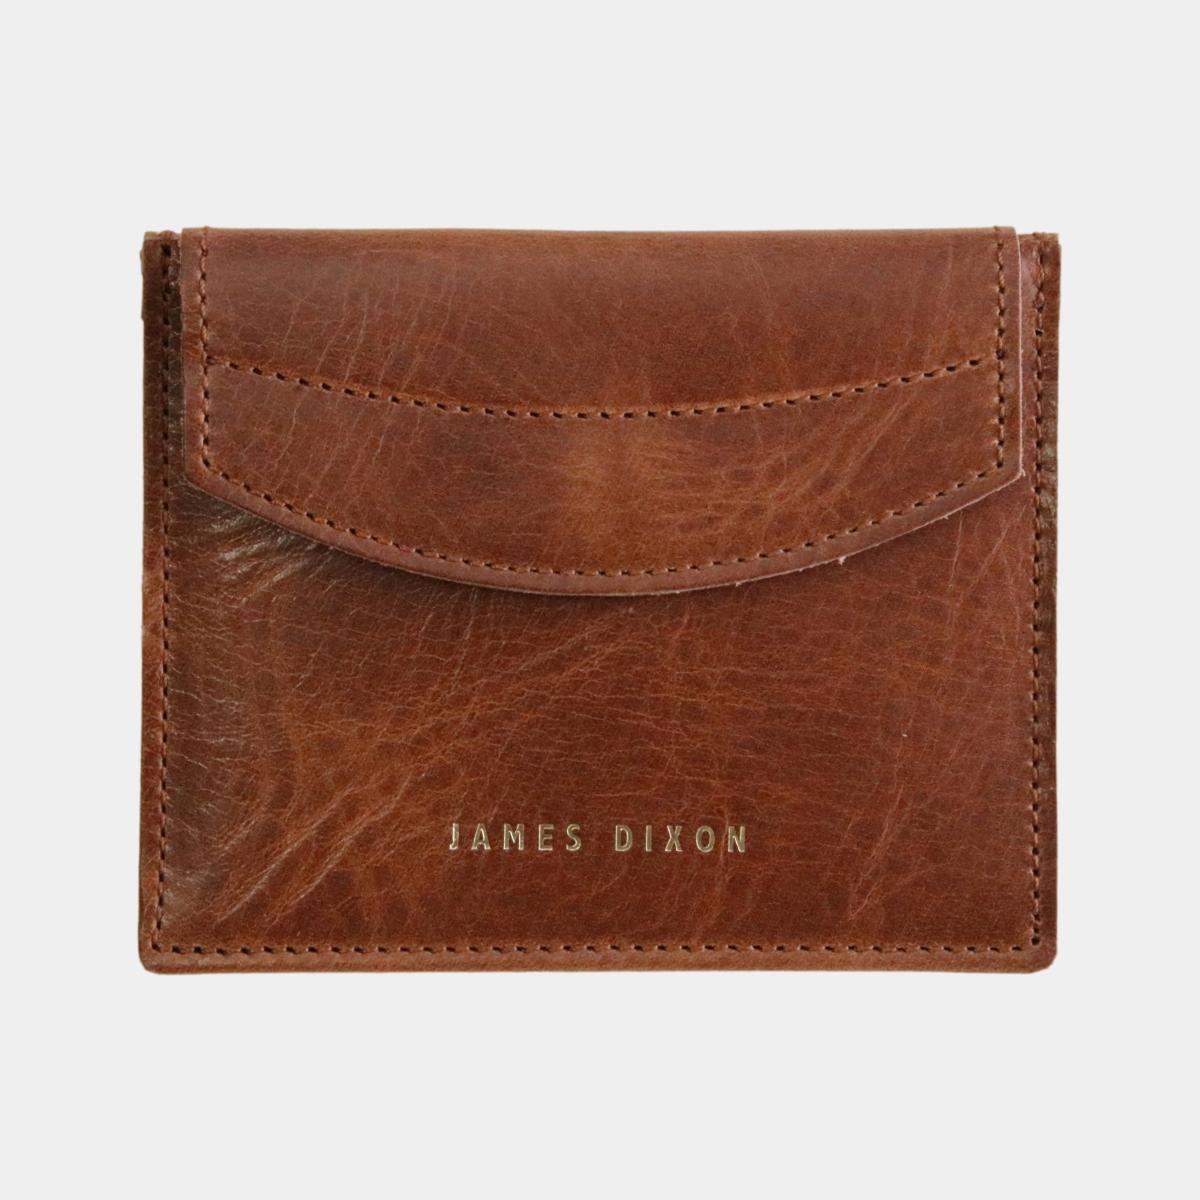 jd0332 james dixon poco classic havana brown coin pocket wallet front